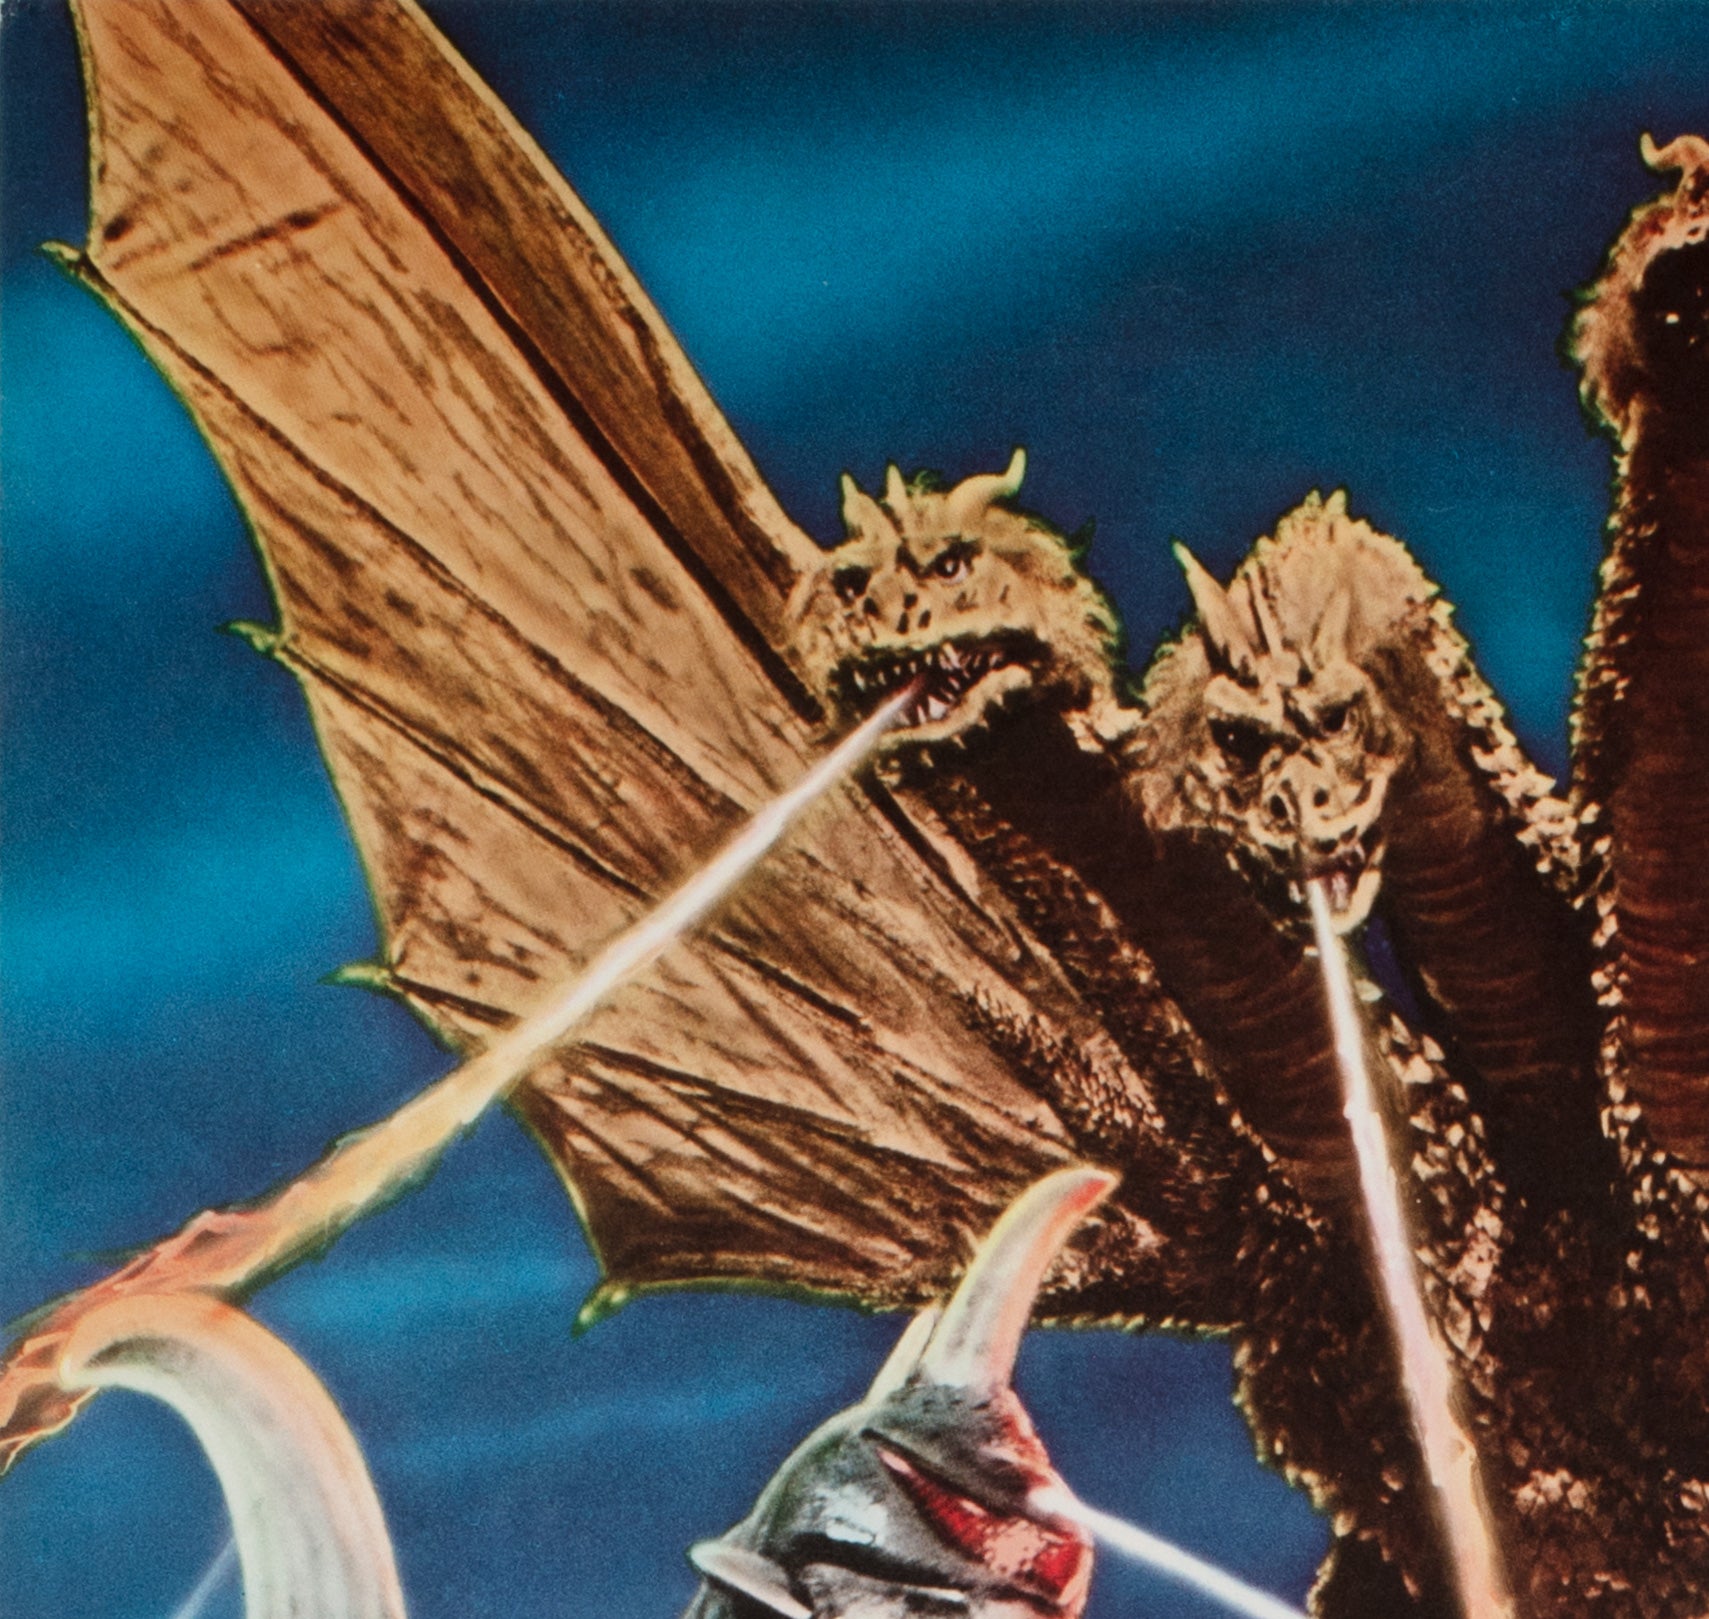 S.H.MonsterArts: Godzilla vs. Gigan - Godzilla 1972